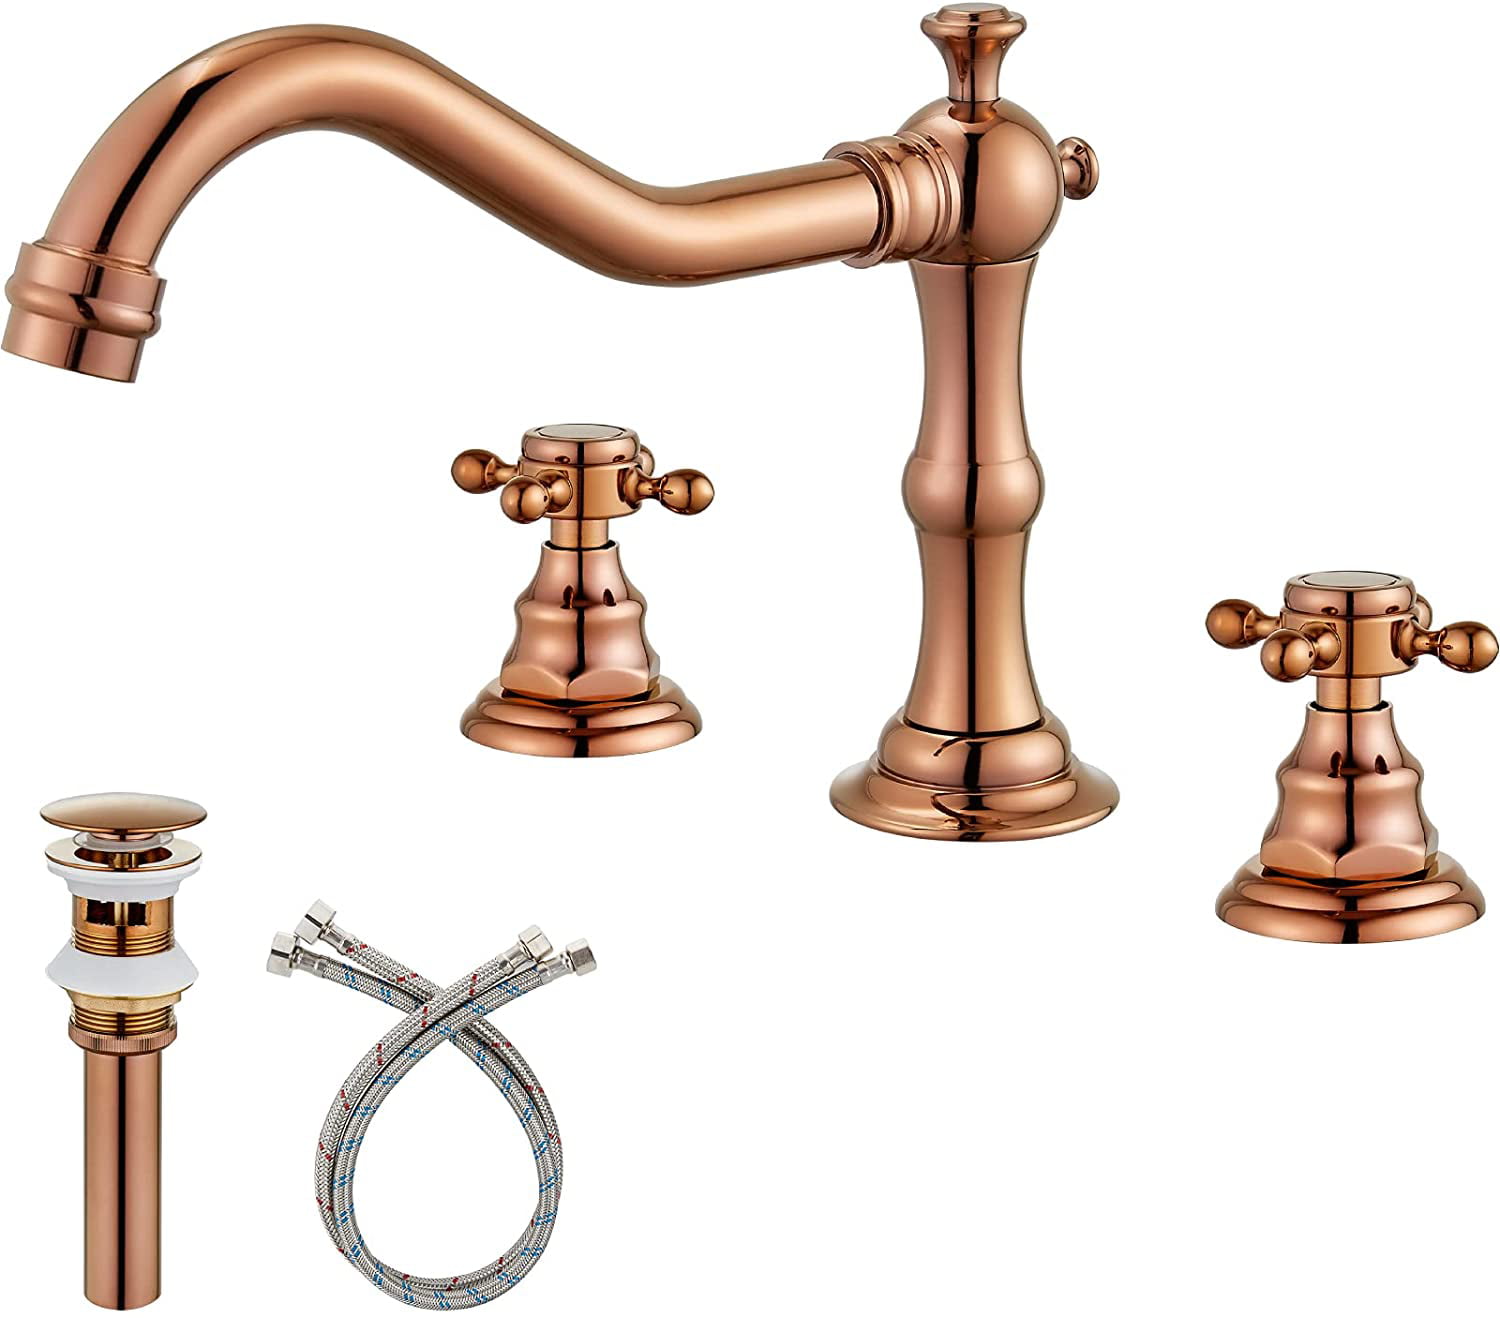 Oil Rubbed Bronze Widespread Bathroom Faucet Basin Mixer Tap Dual Cross Handles 